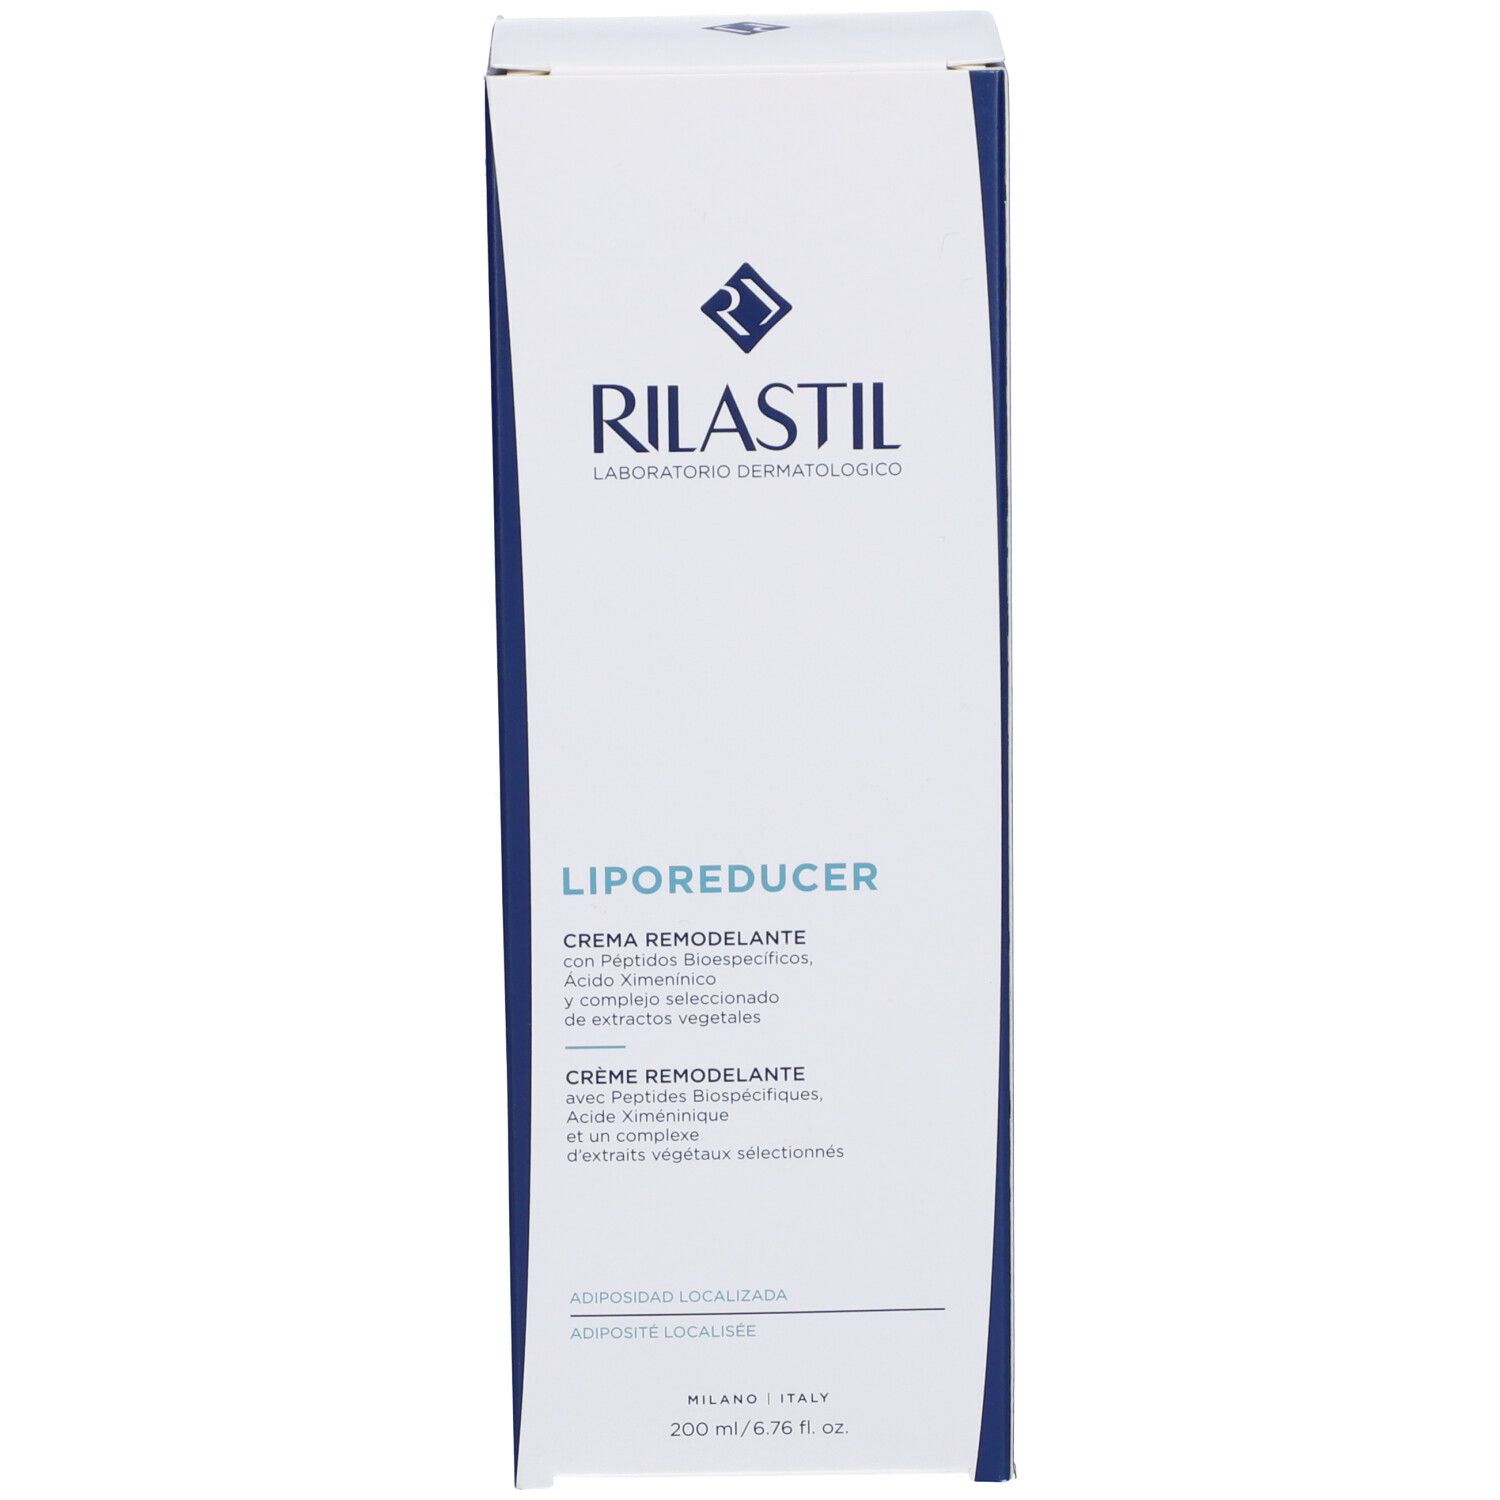 RILASTIL® Liporeducer Crema Rimodellante